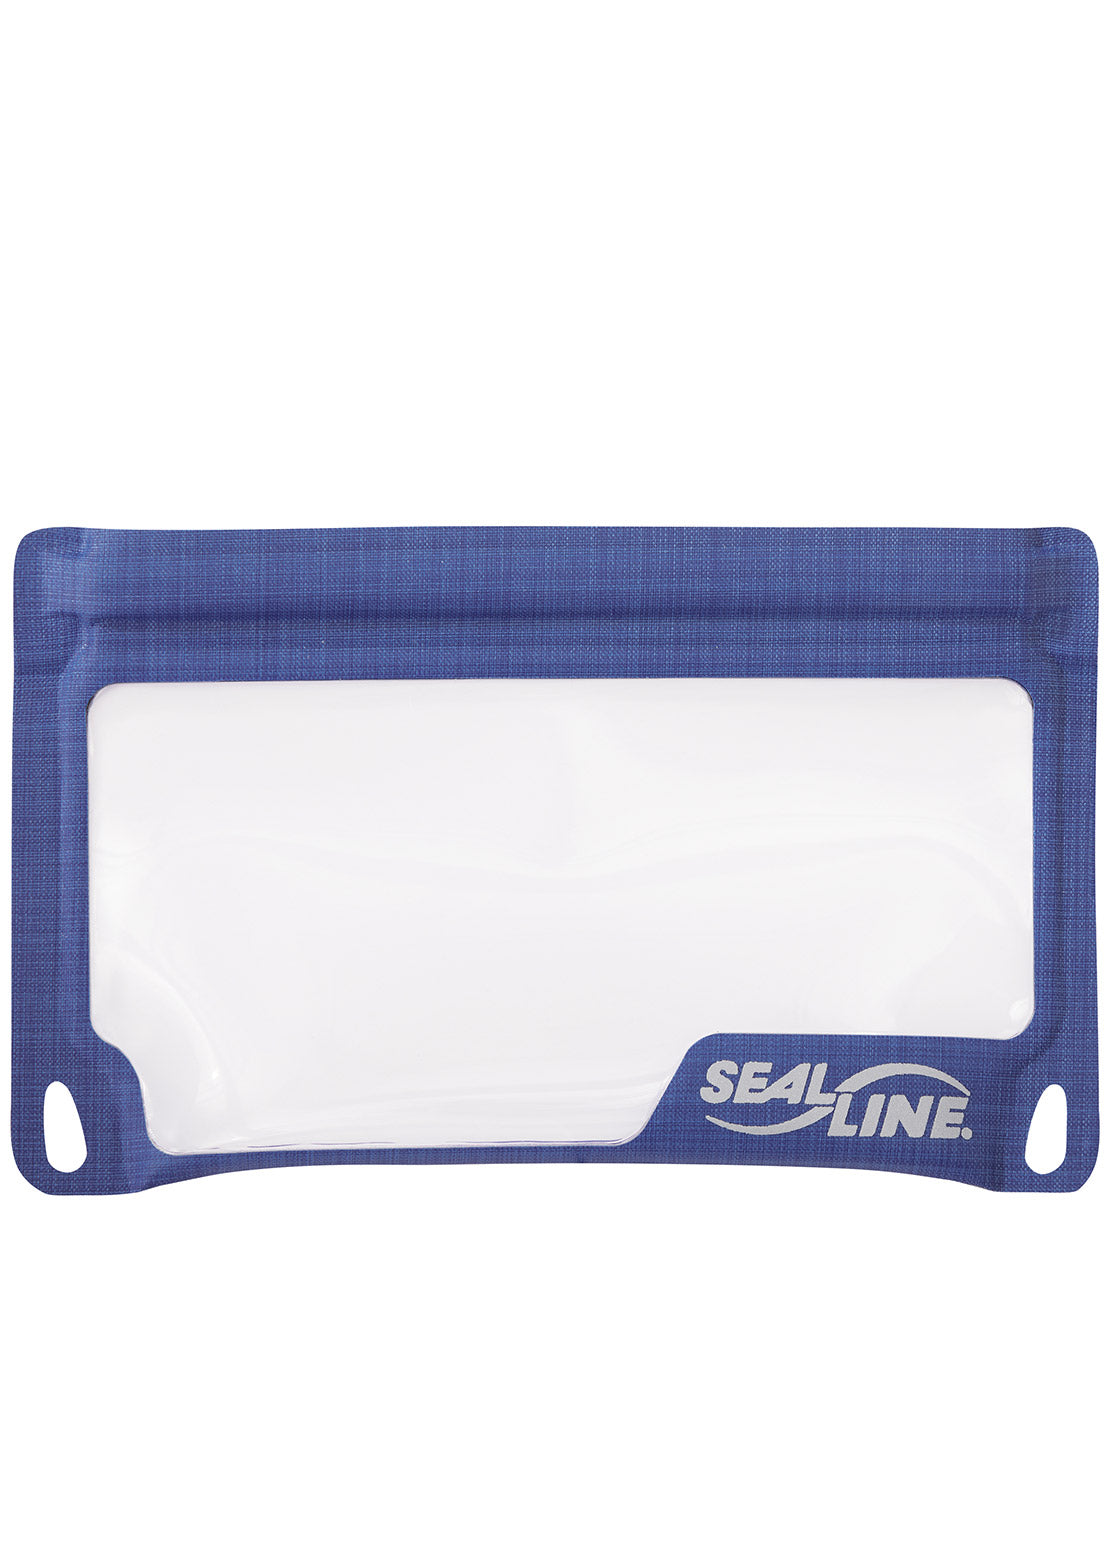 SealLine E-Case Submersible Protection Bag Small Blue